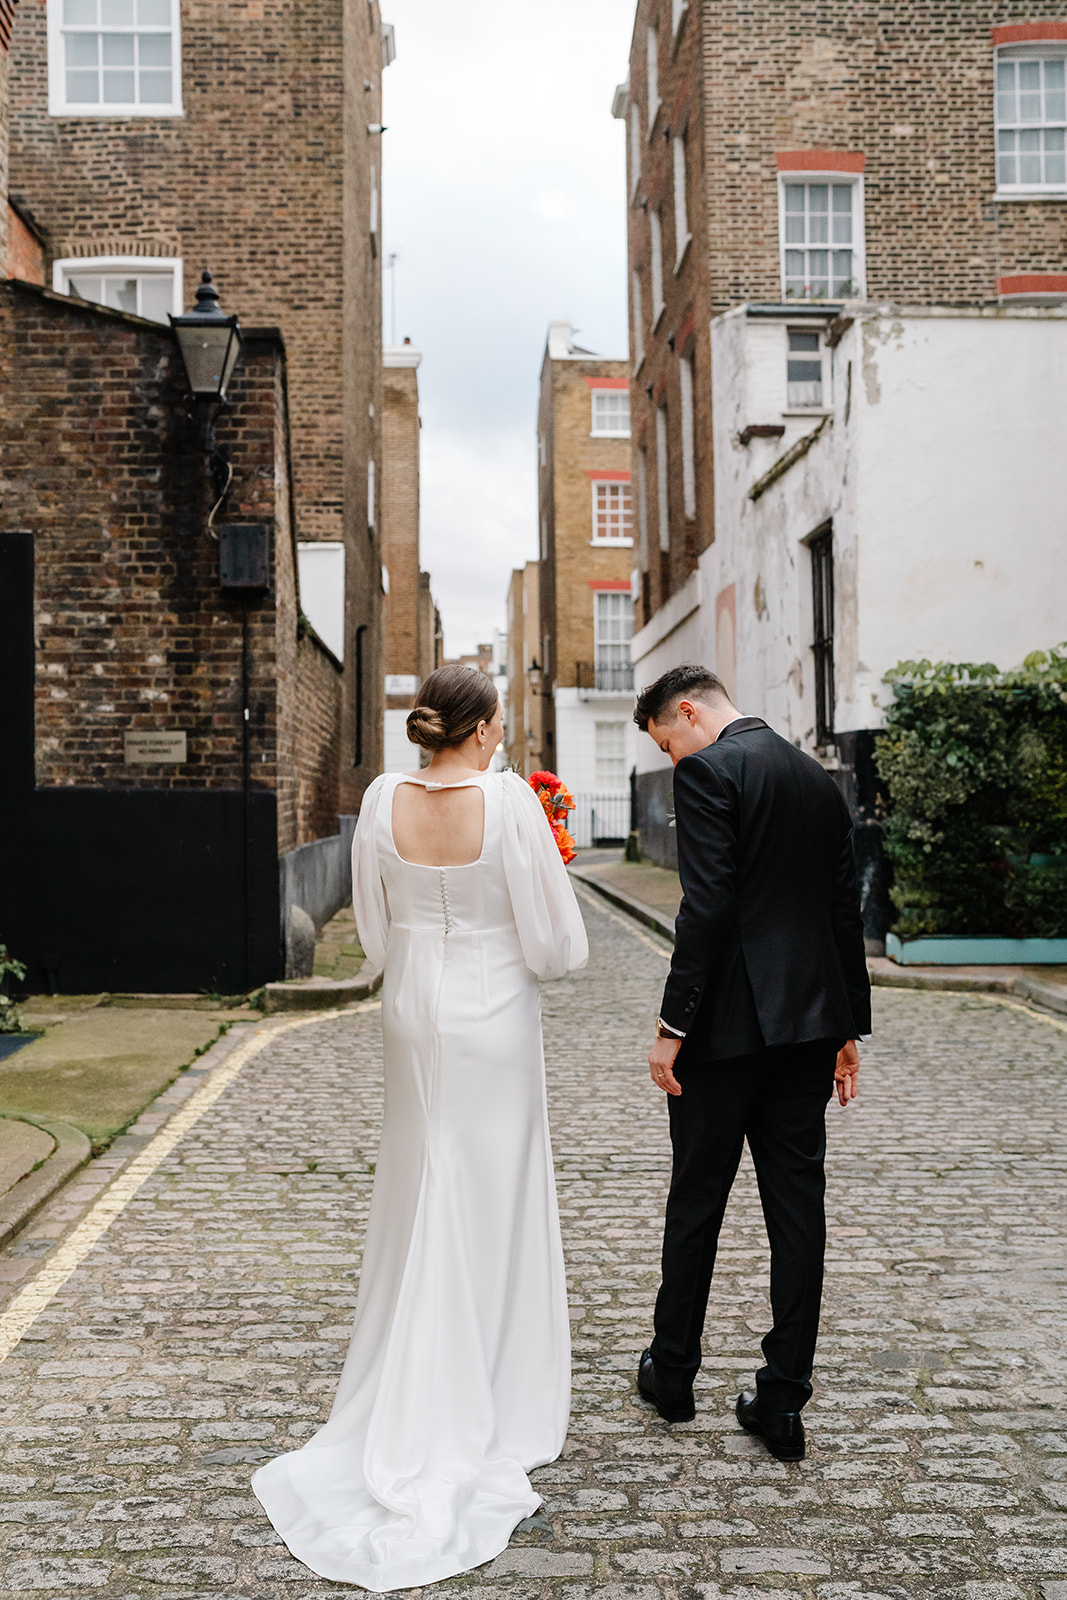 Documentary Couple Portraits Photography at Old Marylebone Town Hall | London Wedding Photographer